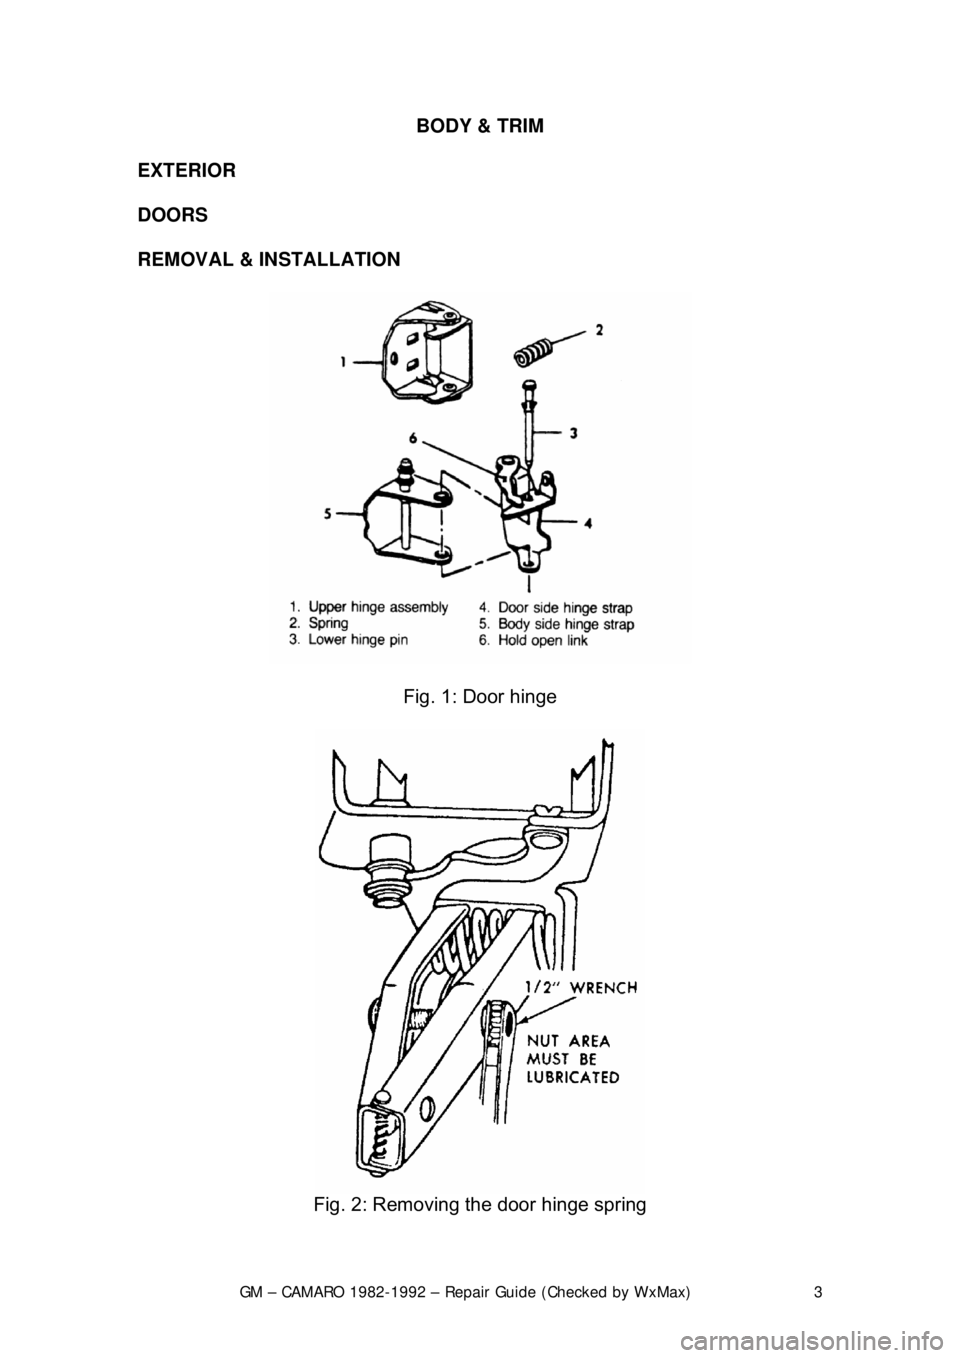 CHEVROLET CAMARO 1982  Repair Guide 
GM – CAMARO 1982-1992 – Repair Guide (Checked by WxMax) 3
BODY & TRIM 
 
EXTERIOR 
 
DOORS 
 
REMOVAL & INSTALLATION  
 
Fig. 1: Door hinge 
 
Fig. 2: Removing the door hinge spring  